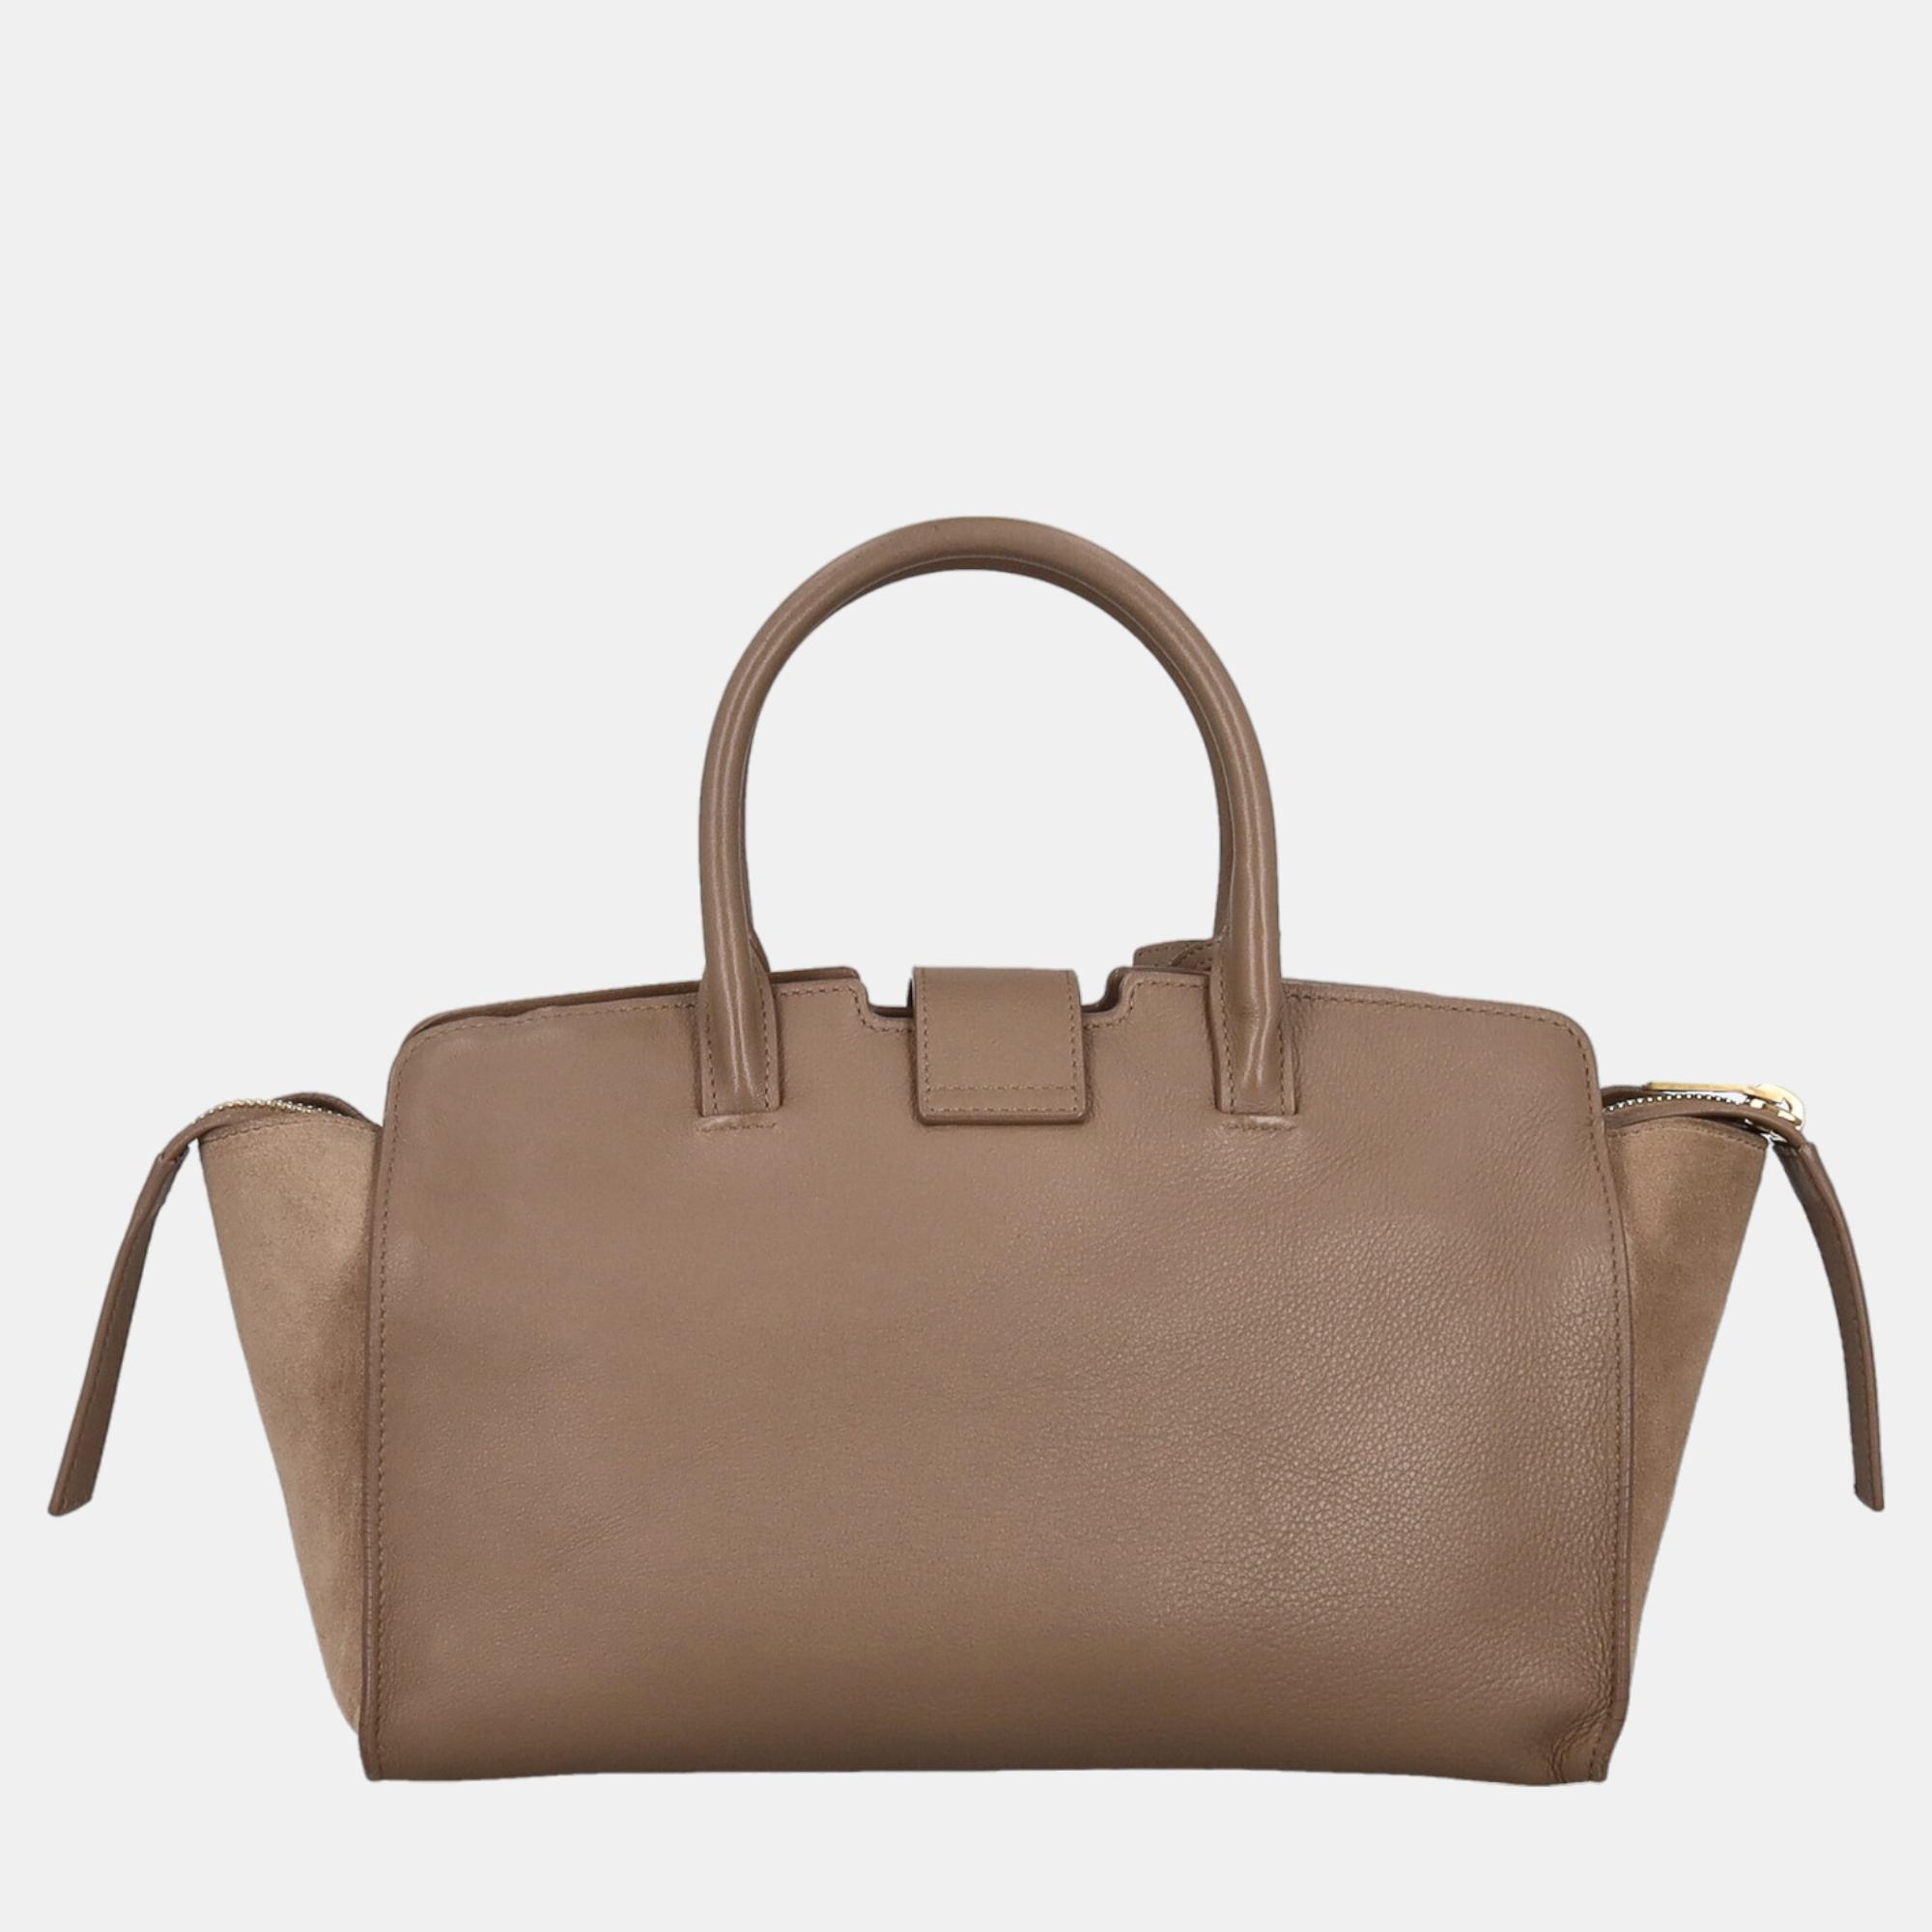 Saint Laurent Monogram Downtown Cabas -  Women's Leather Tote Bag - Beige - One Size